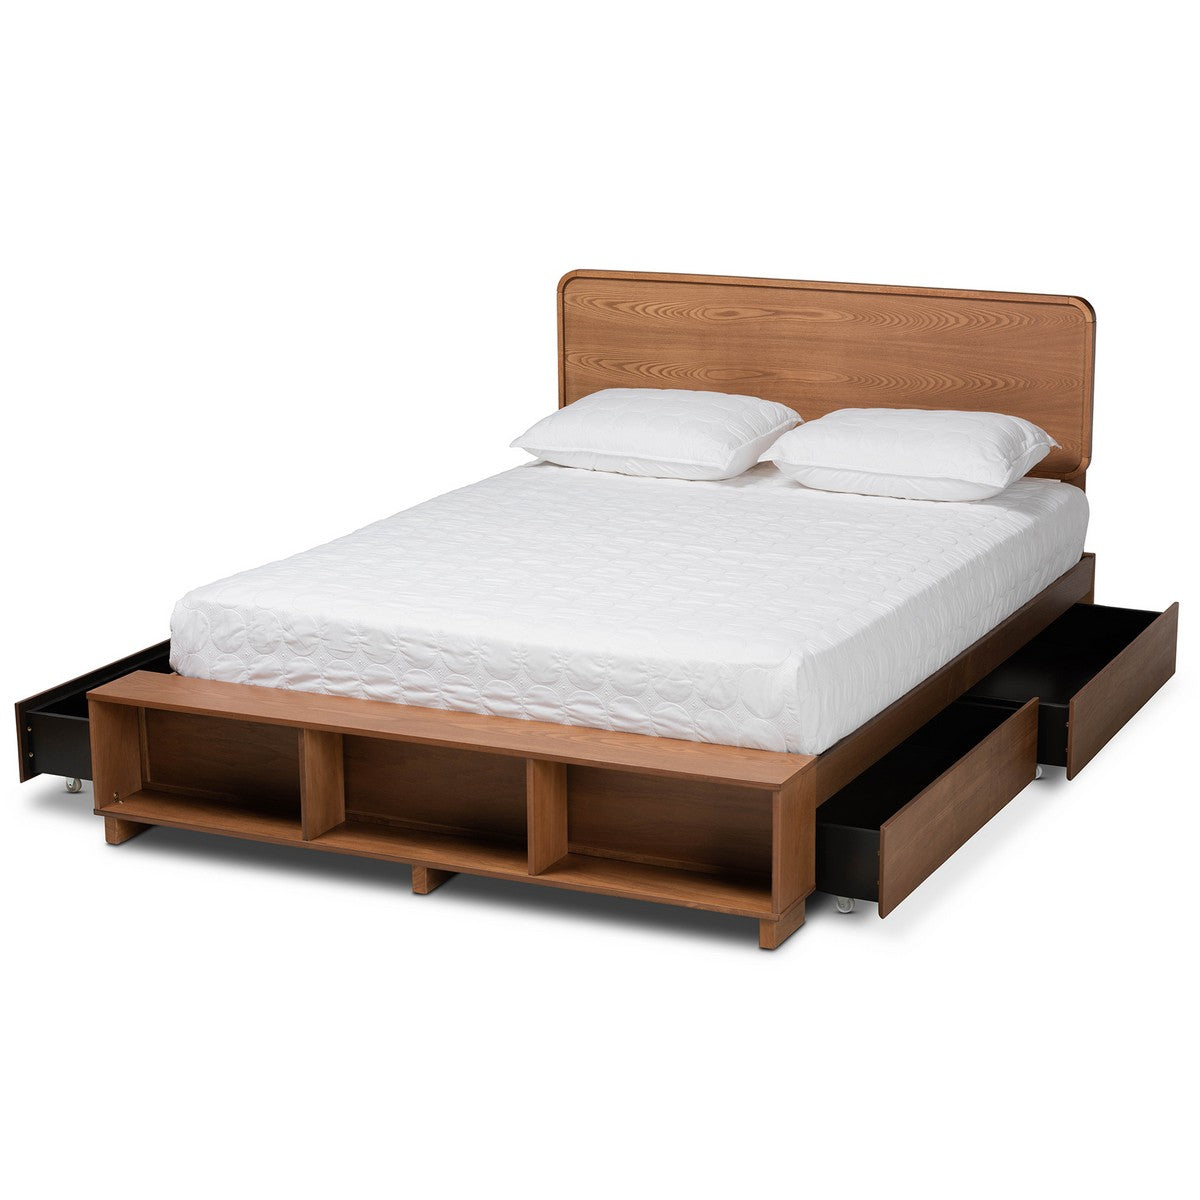 Baxton Studio Vita Modern Transitional Ash Walnut Brown Finished Wood 4-Drawer Queen Size Platform Storage Bed